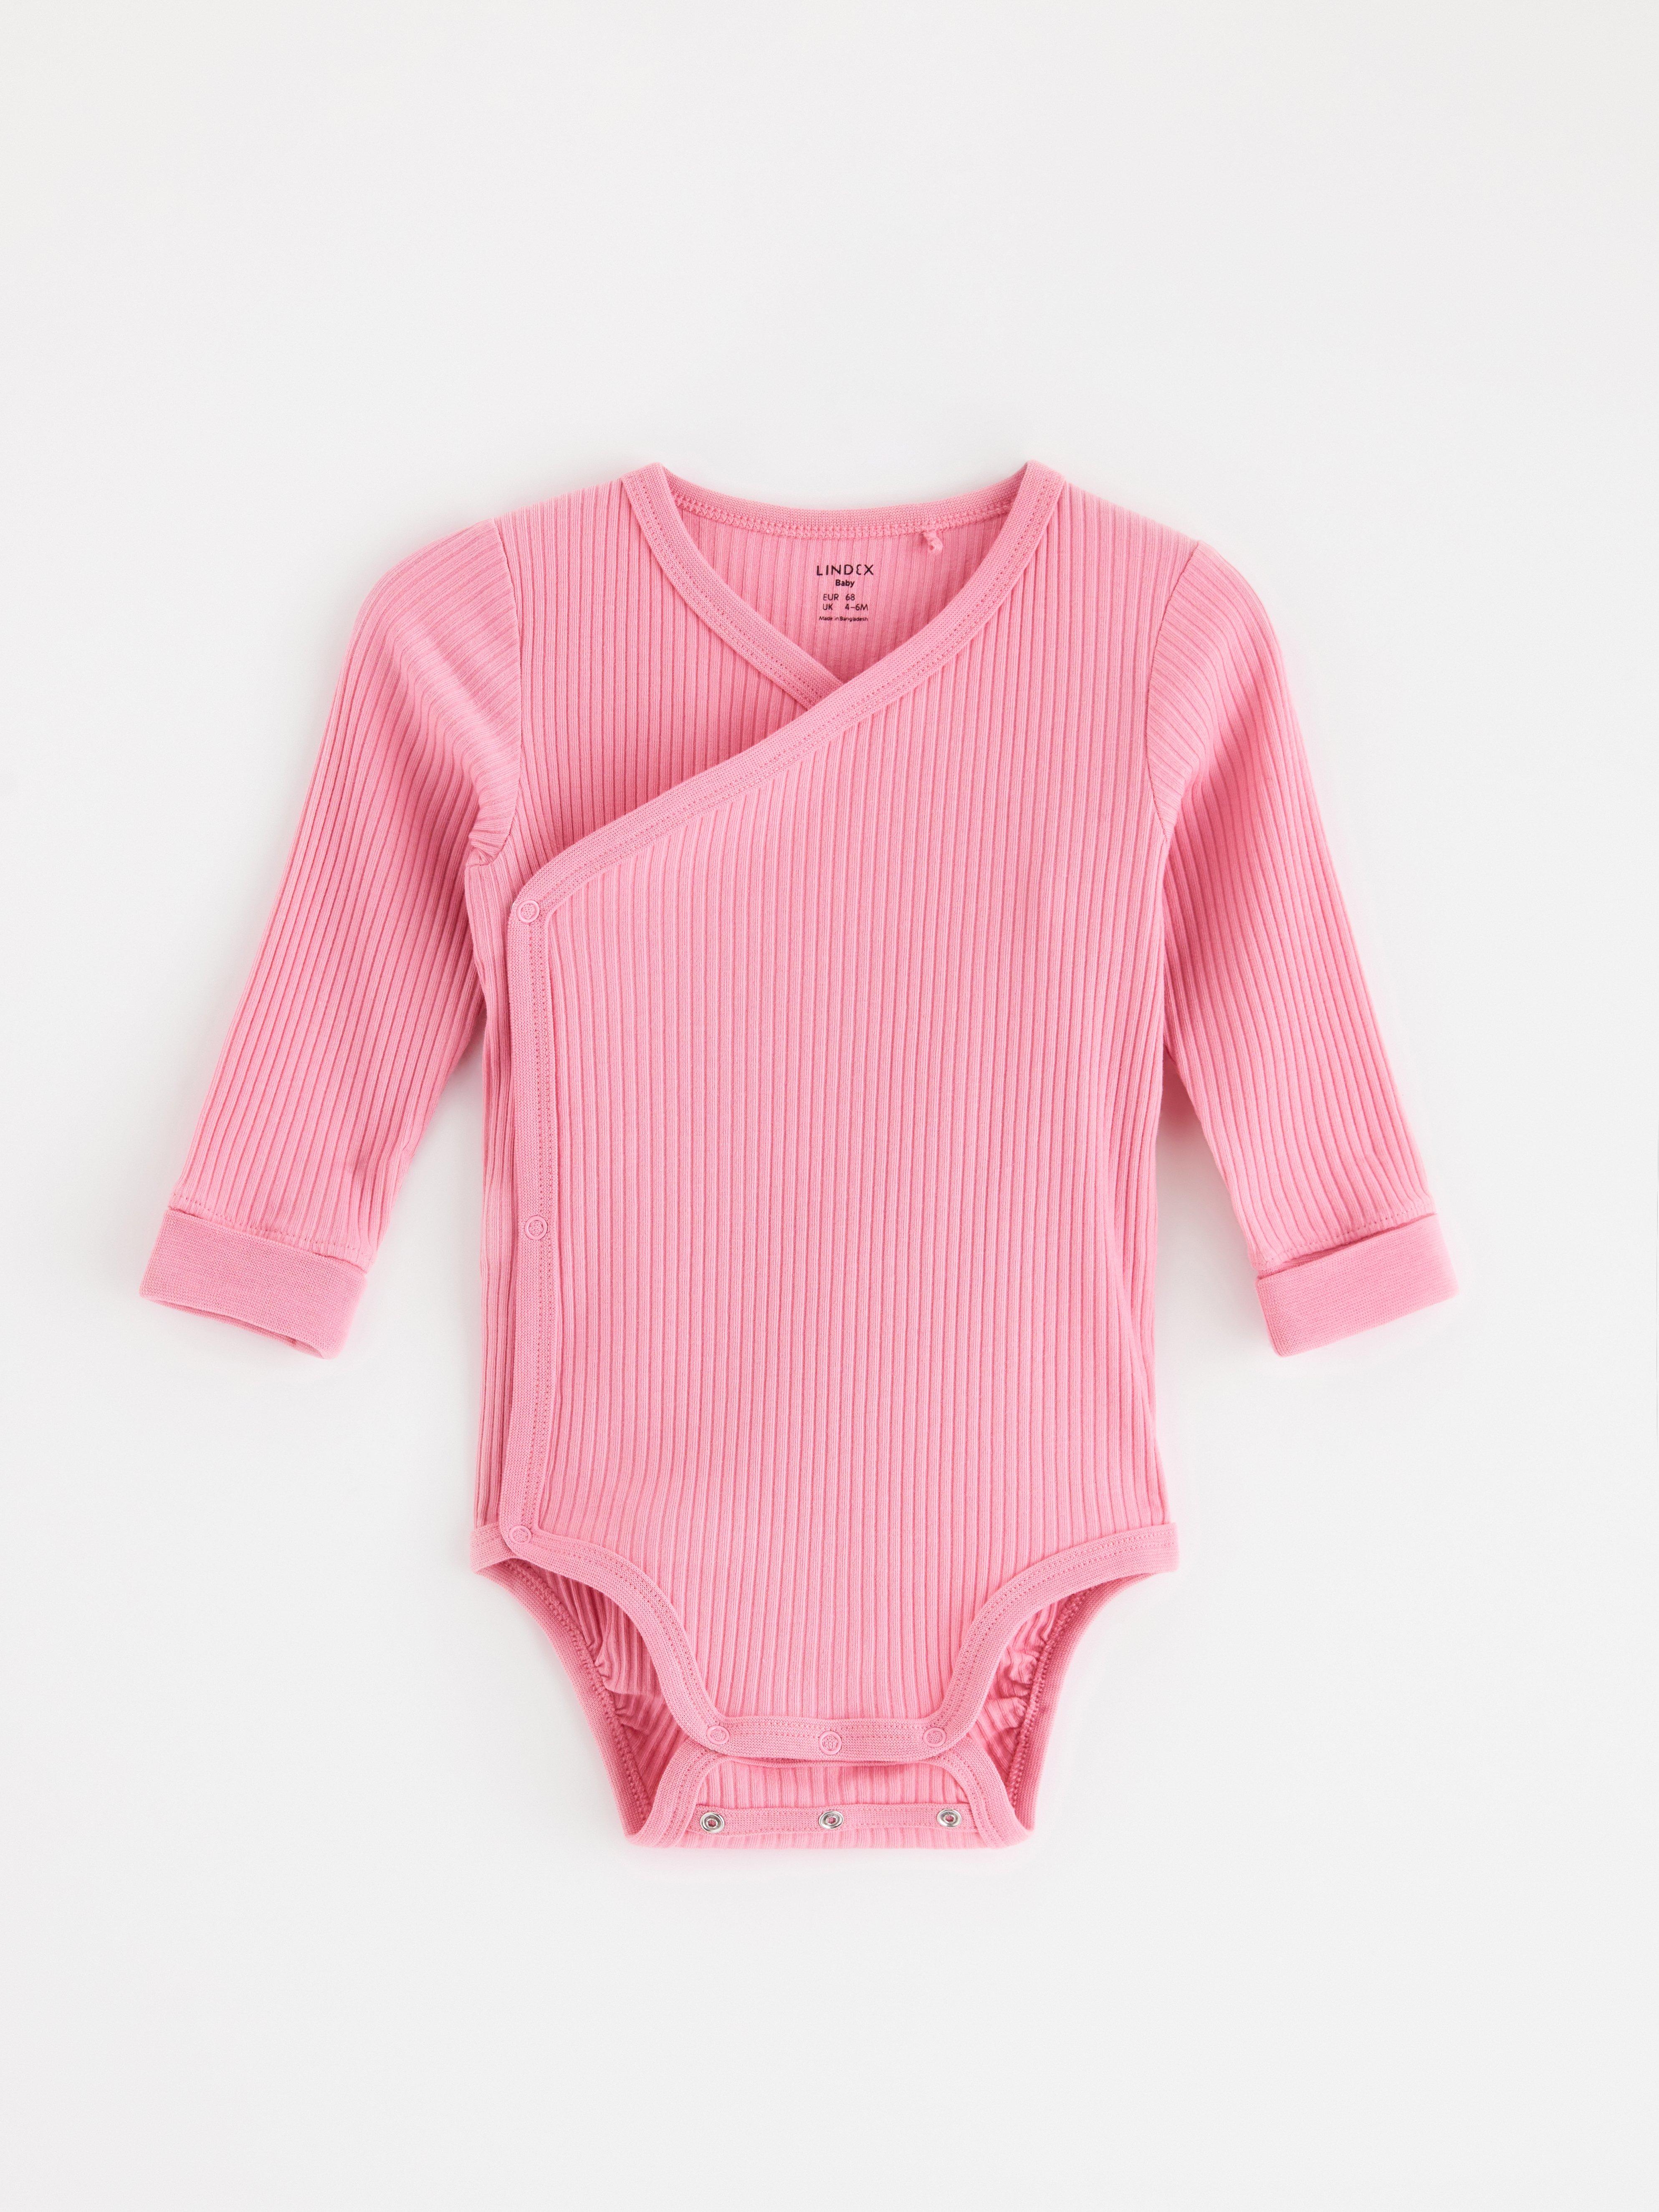 ropa interior de lana : Ropa de moda Lindex Chile, Lindex baby overall le  permite vestirse responsablemente.